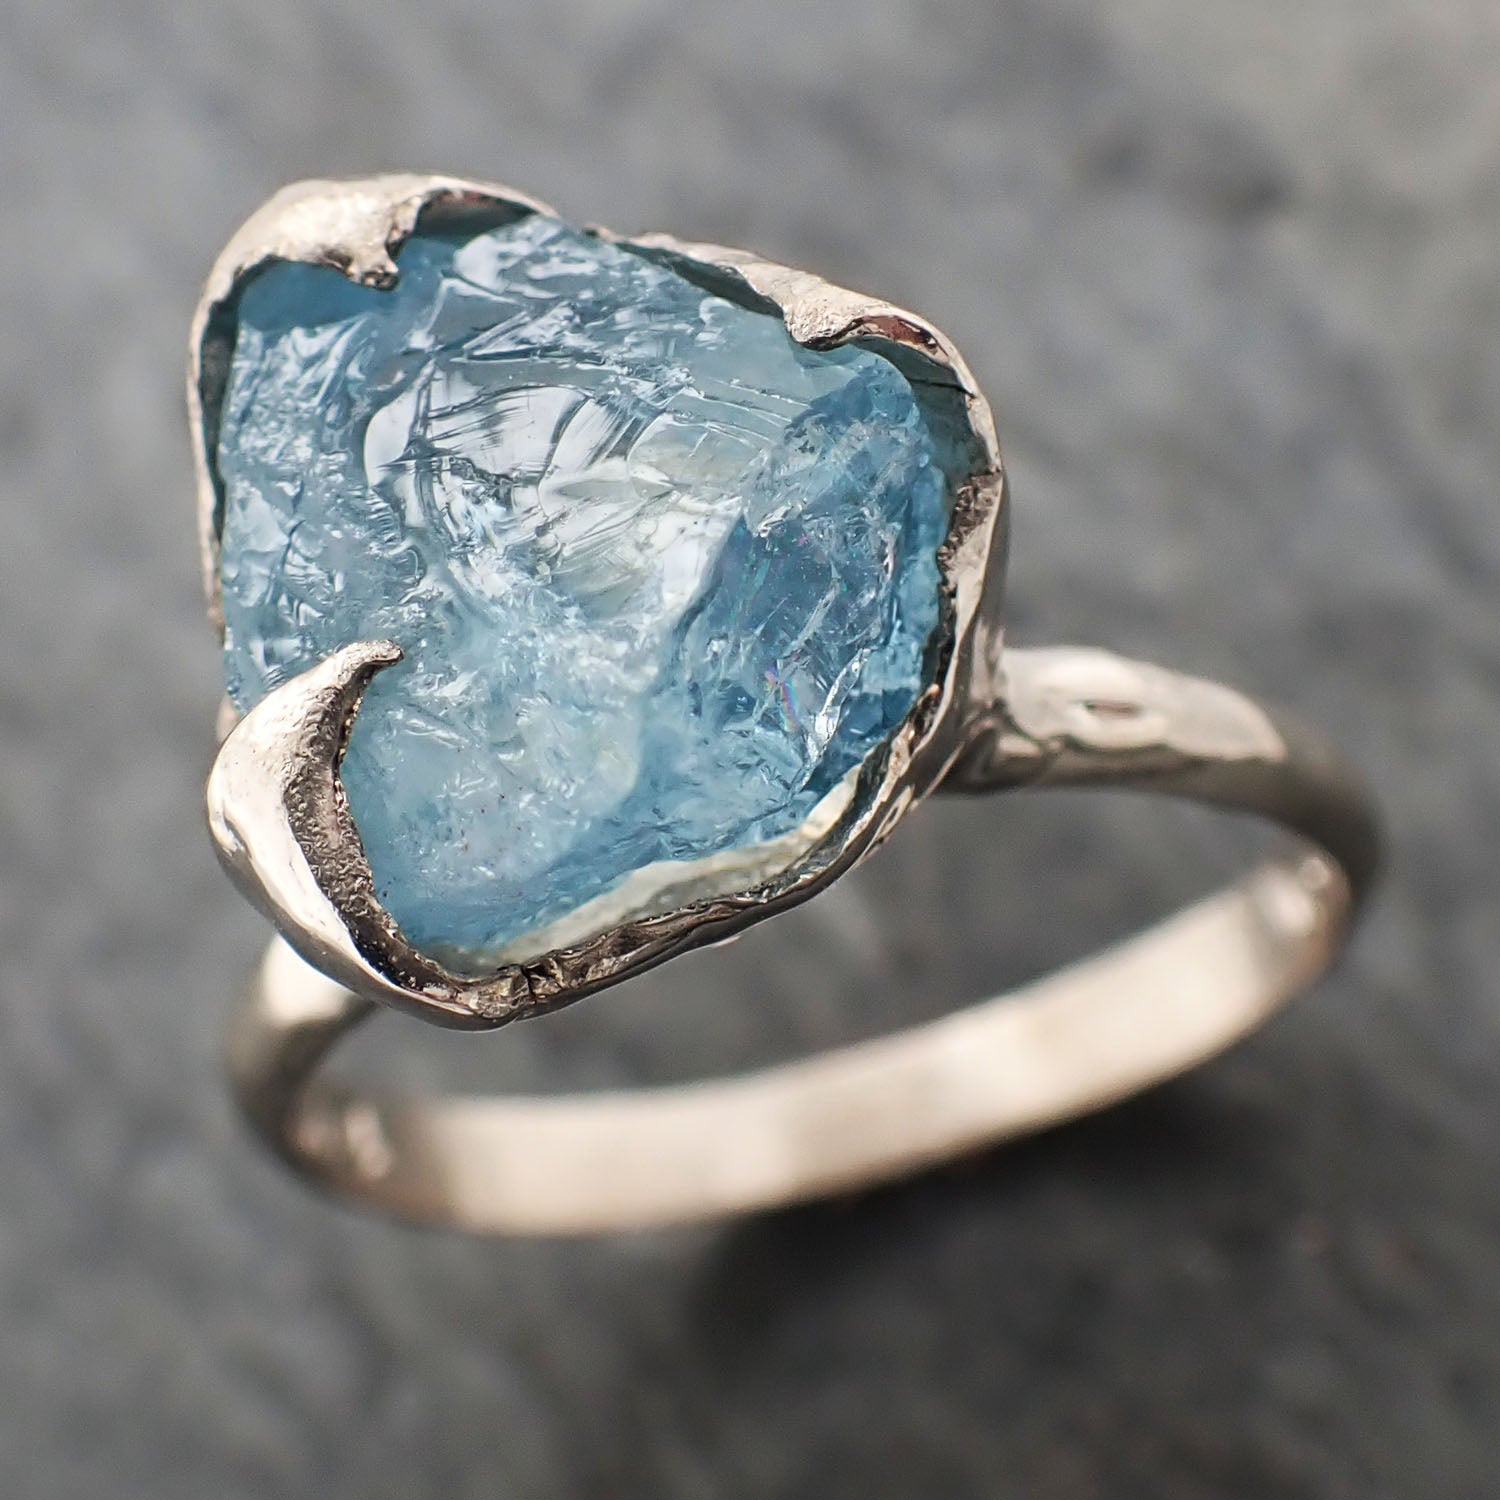 raw uncut aquamarine solitaire white gold ring custom one of a kind gemstone ring bespoke byangeline 2321 Alternative Engagement